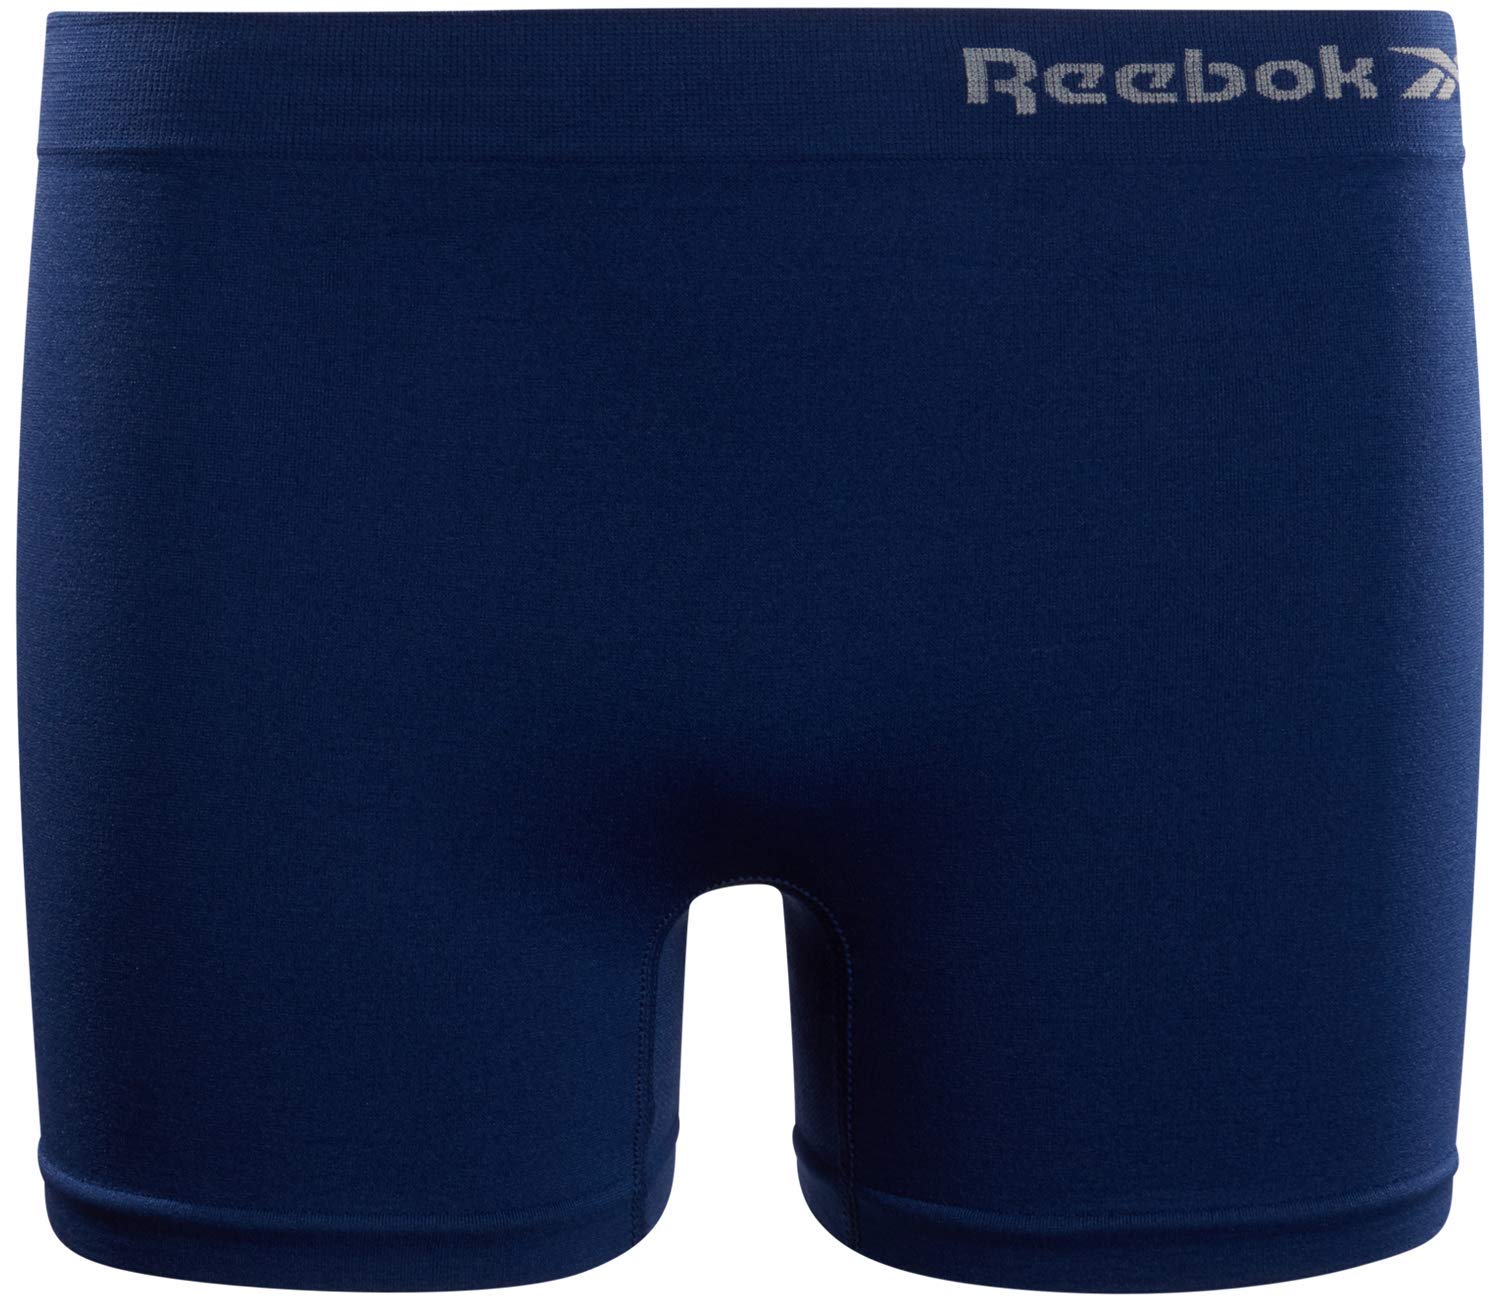 Reebok Girls’ Underwear – Seamless Cartwheel Shorties (4 Pack)